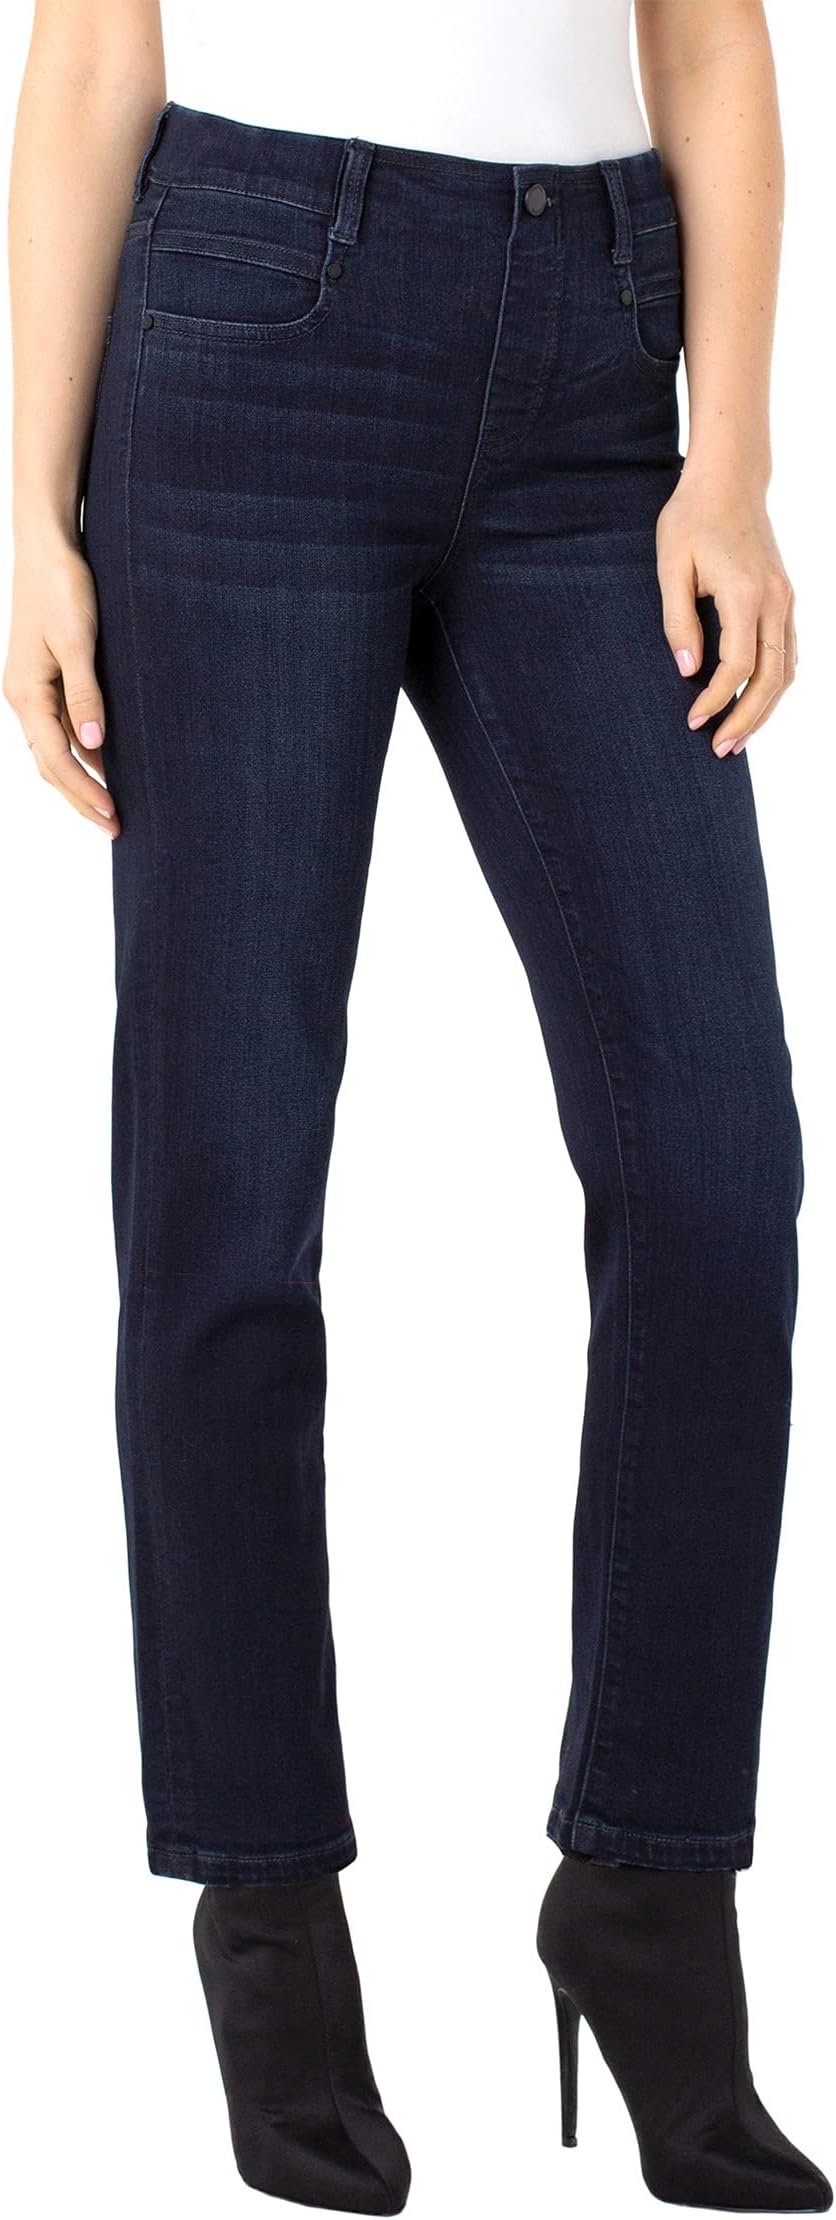 цена Джинсы Gia Glider Pull-On Slim Jeans in Halifax Liverpool Los Angeles, цвет Halifax